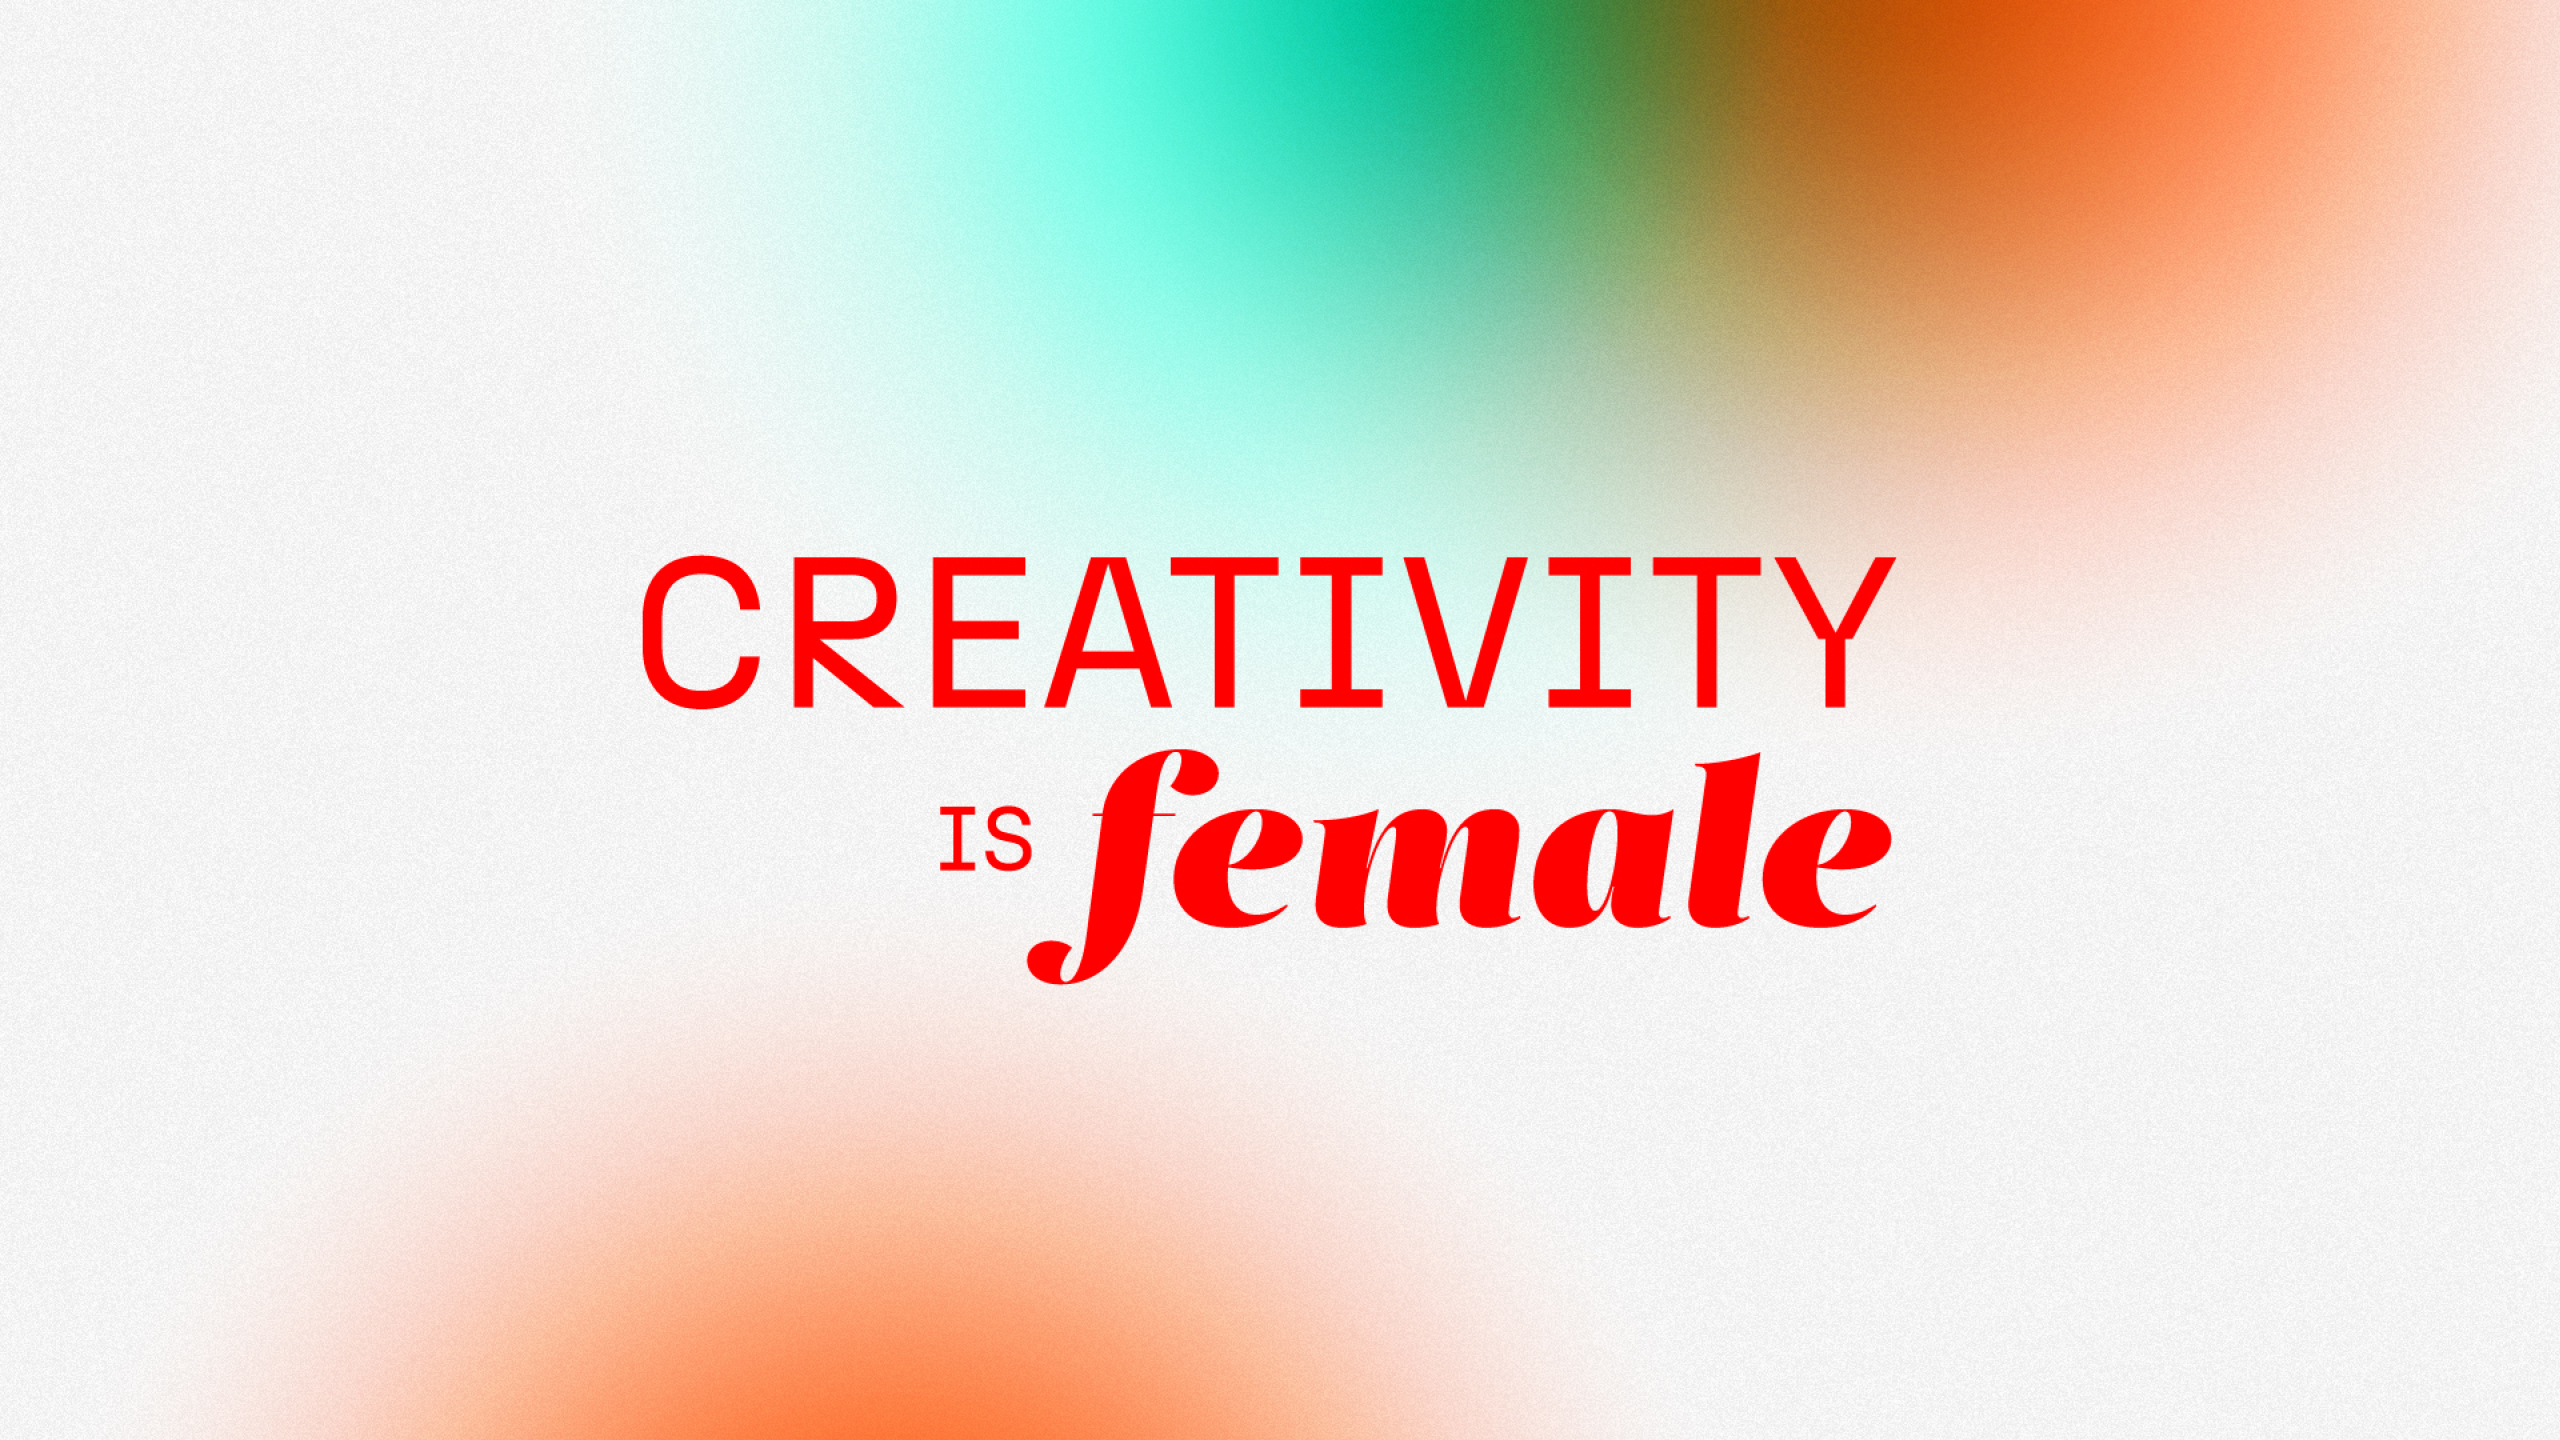 Creativity is female by Avocado - Creative Work